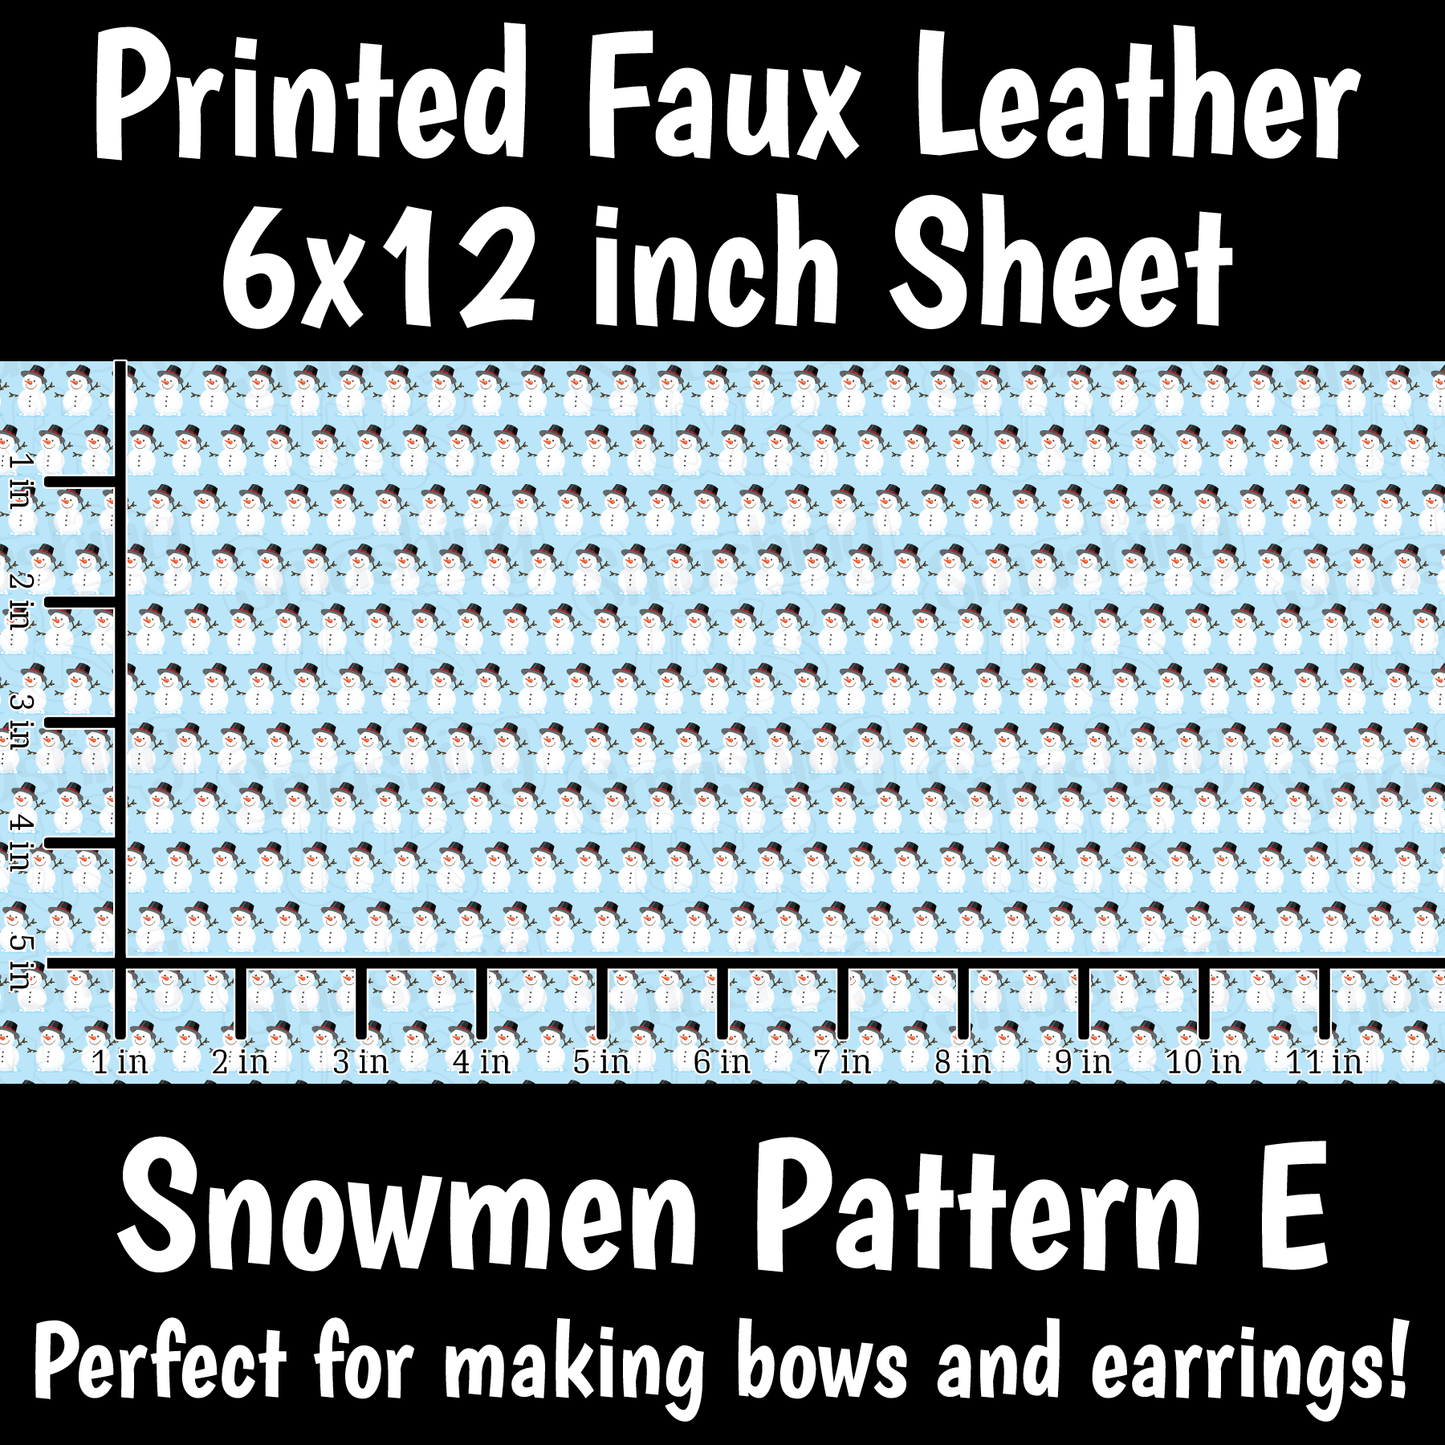 Snowmen Pattern E - Faux Leather Sheet (SHIPS IN 3 BUS DAYS)